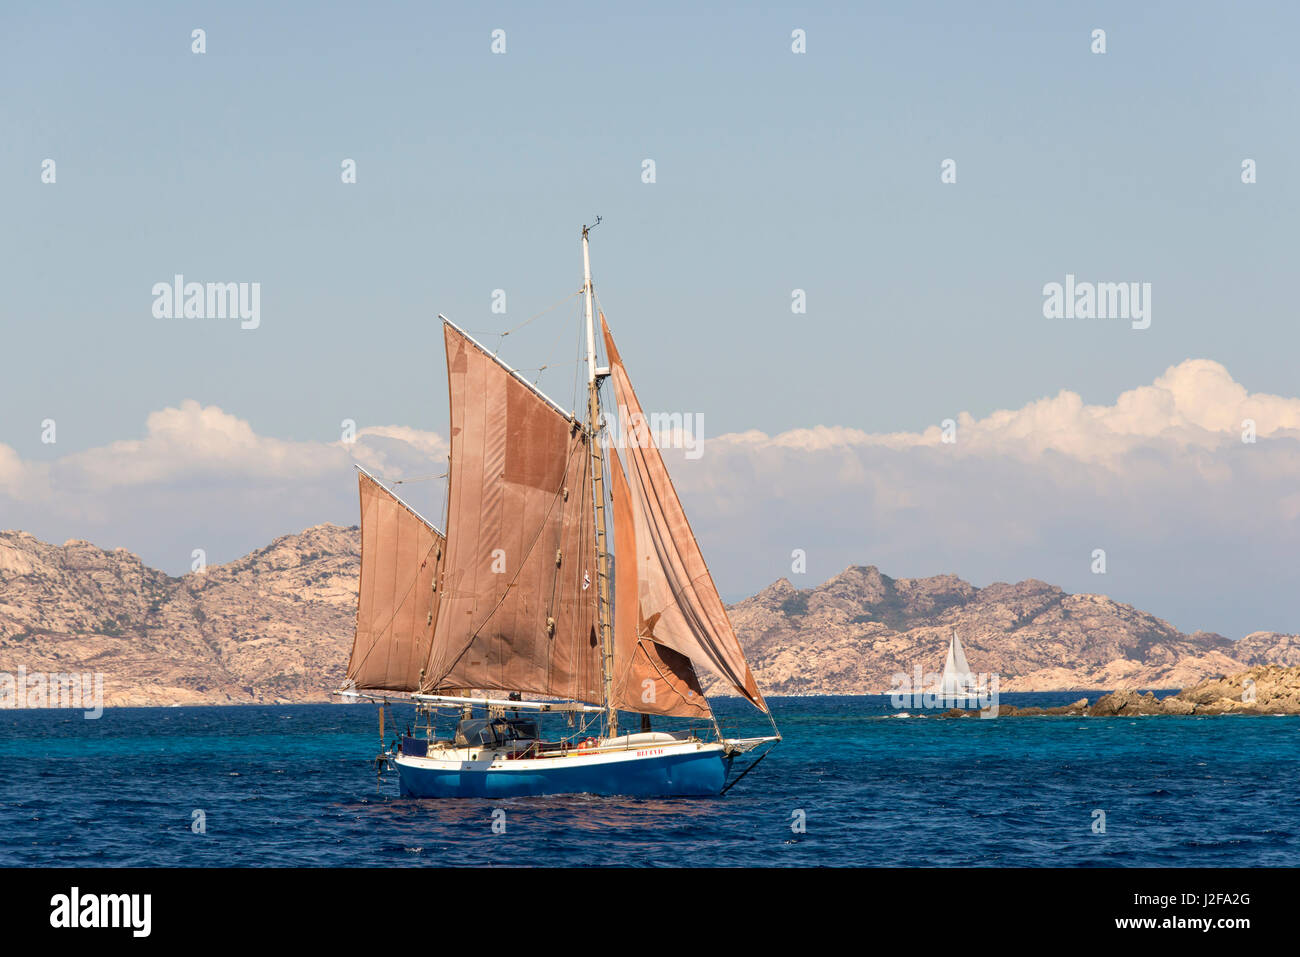 Italy, Sardinia. Red sails on gaff rigged sailboat Stock Photo